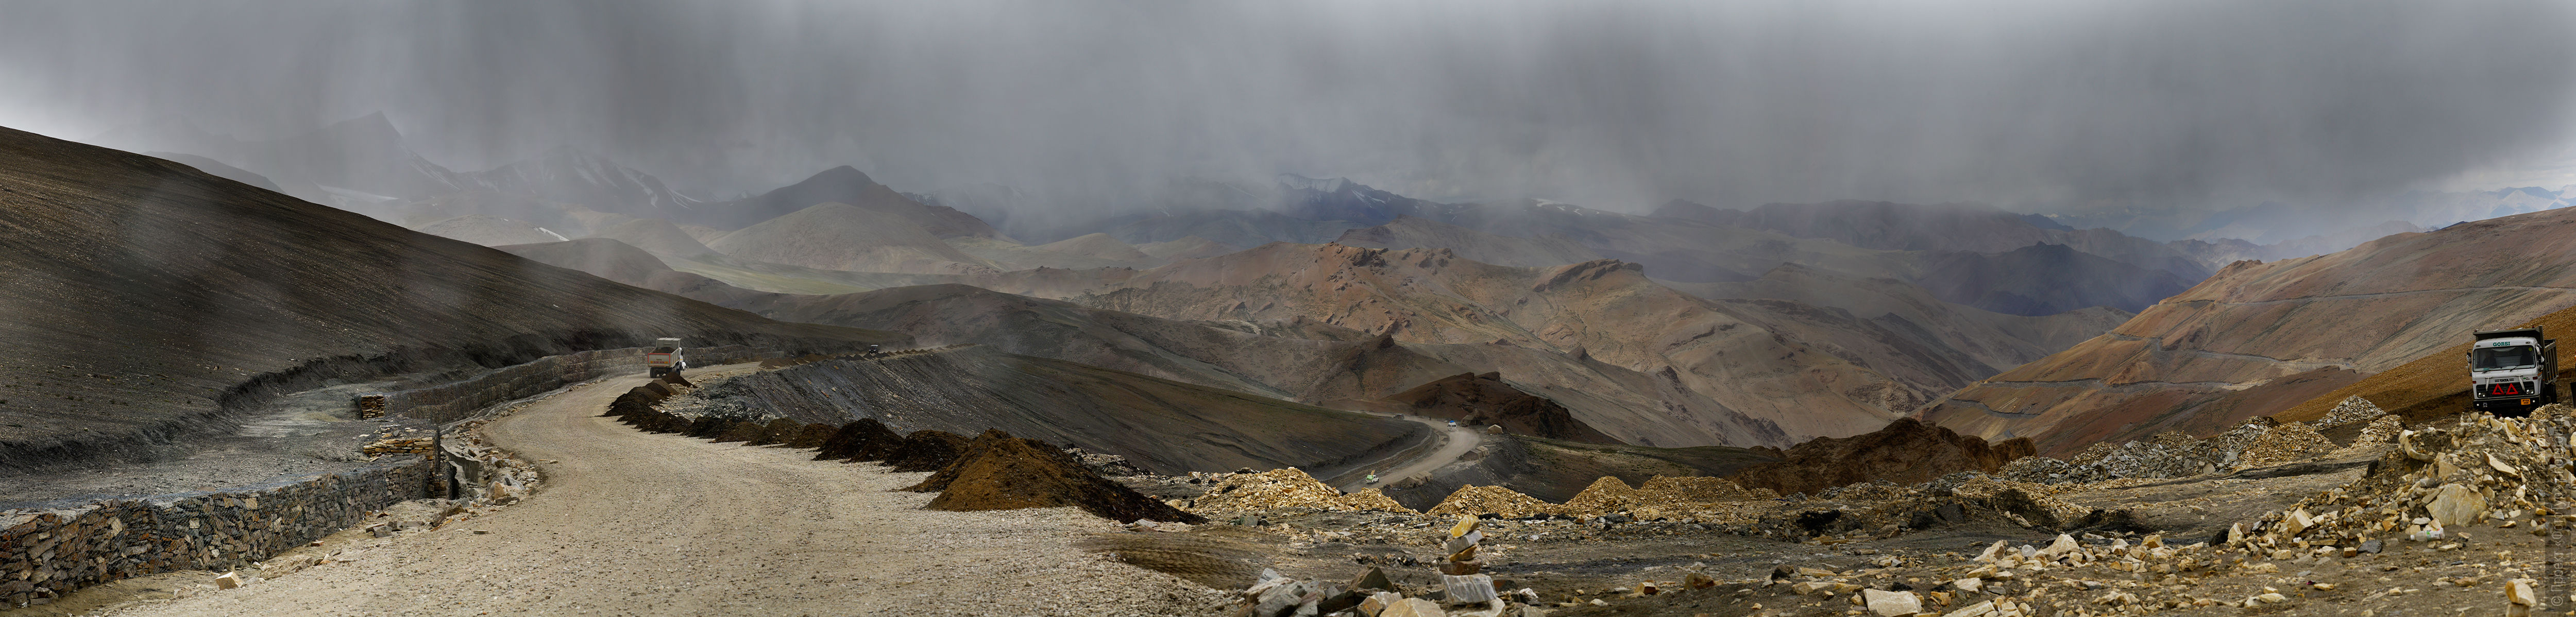 Thang La Pass (5325 m), Leh-Manali Highway, Ladakh. Tour of Small Tibet, 2017.